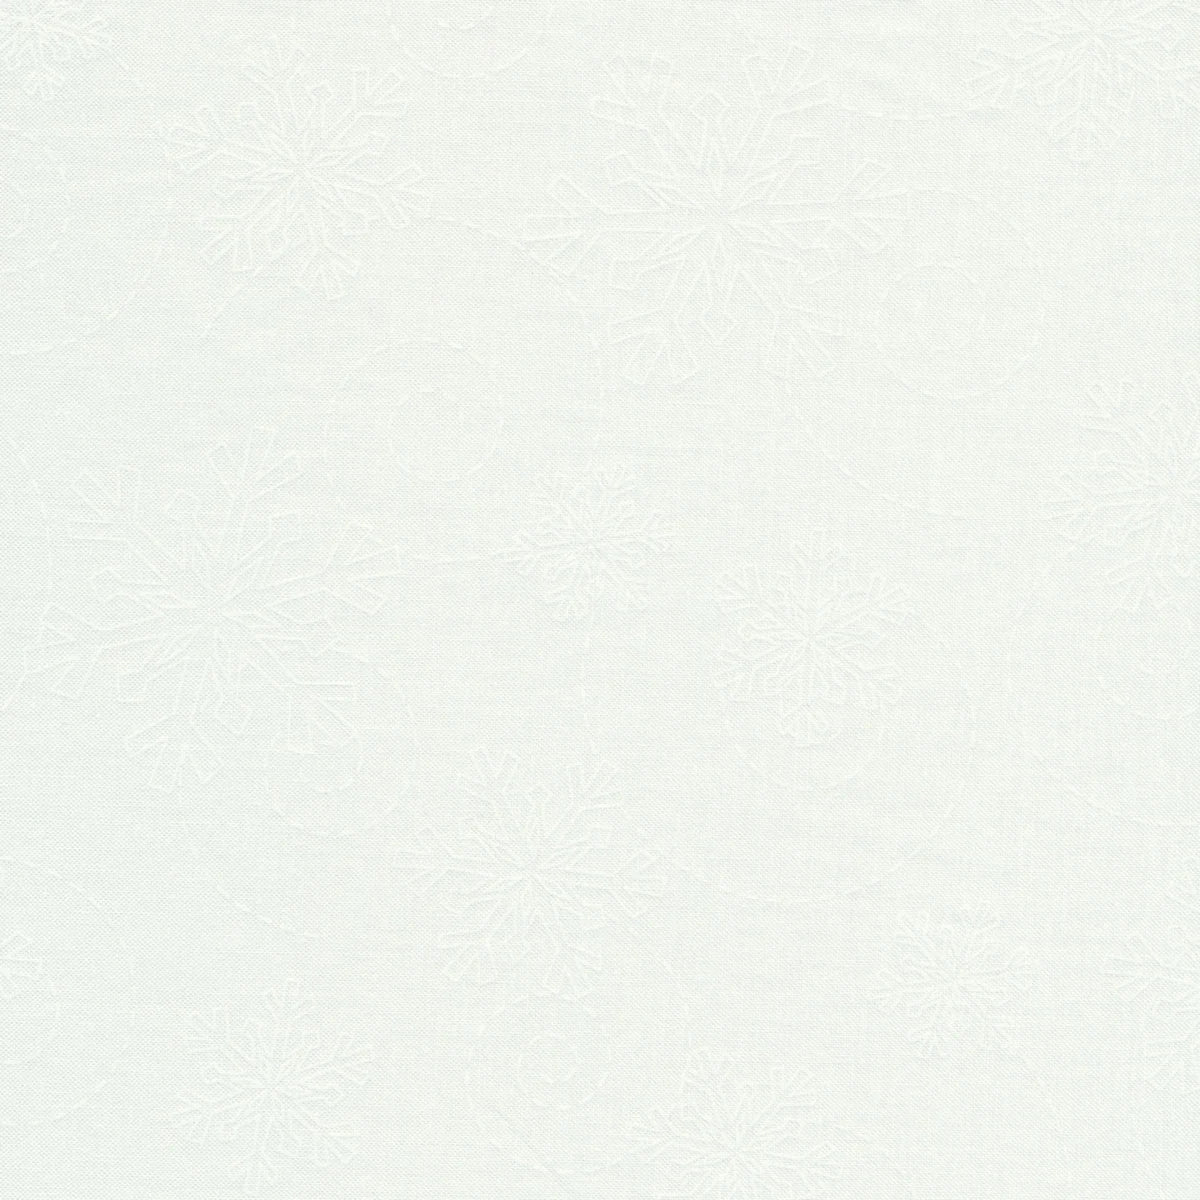 Kimberbell Basics White on White Snowflakes by Kim Christopherson - 8240M-WW -8240M-WW-FQ - Justin Fabric!